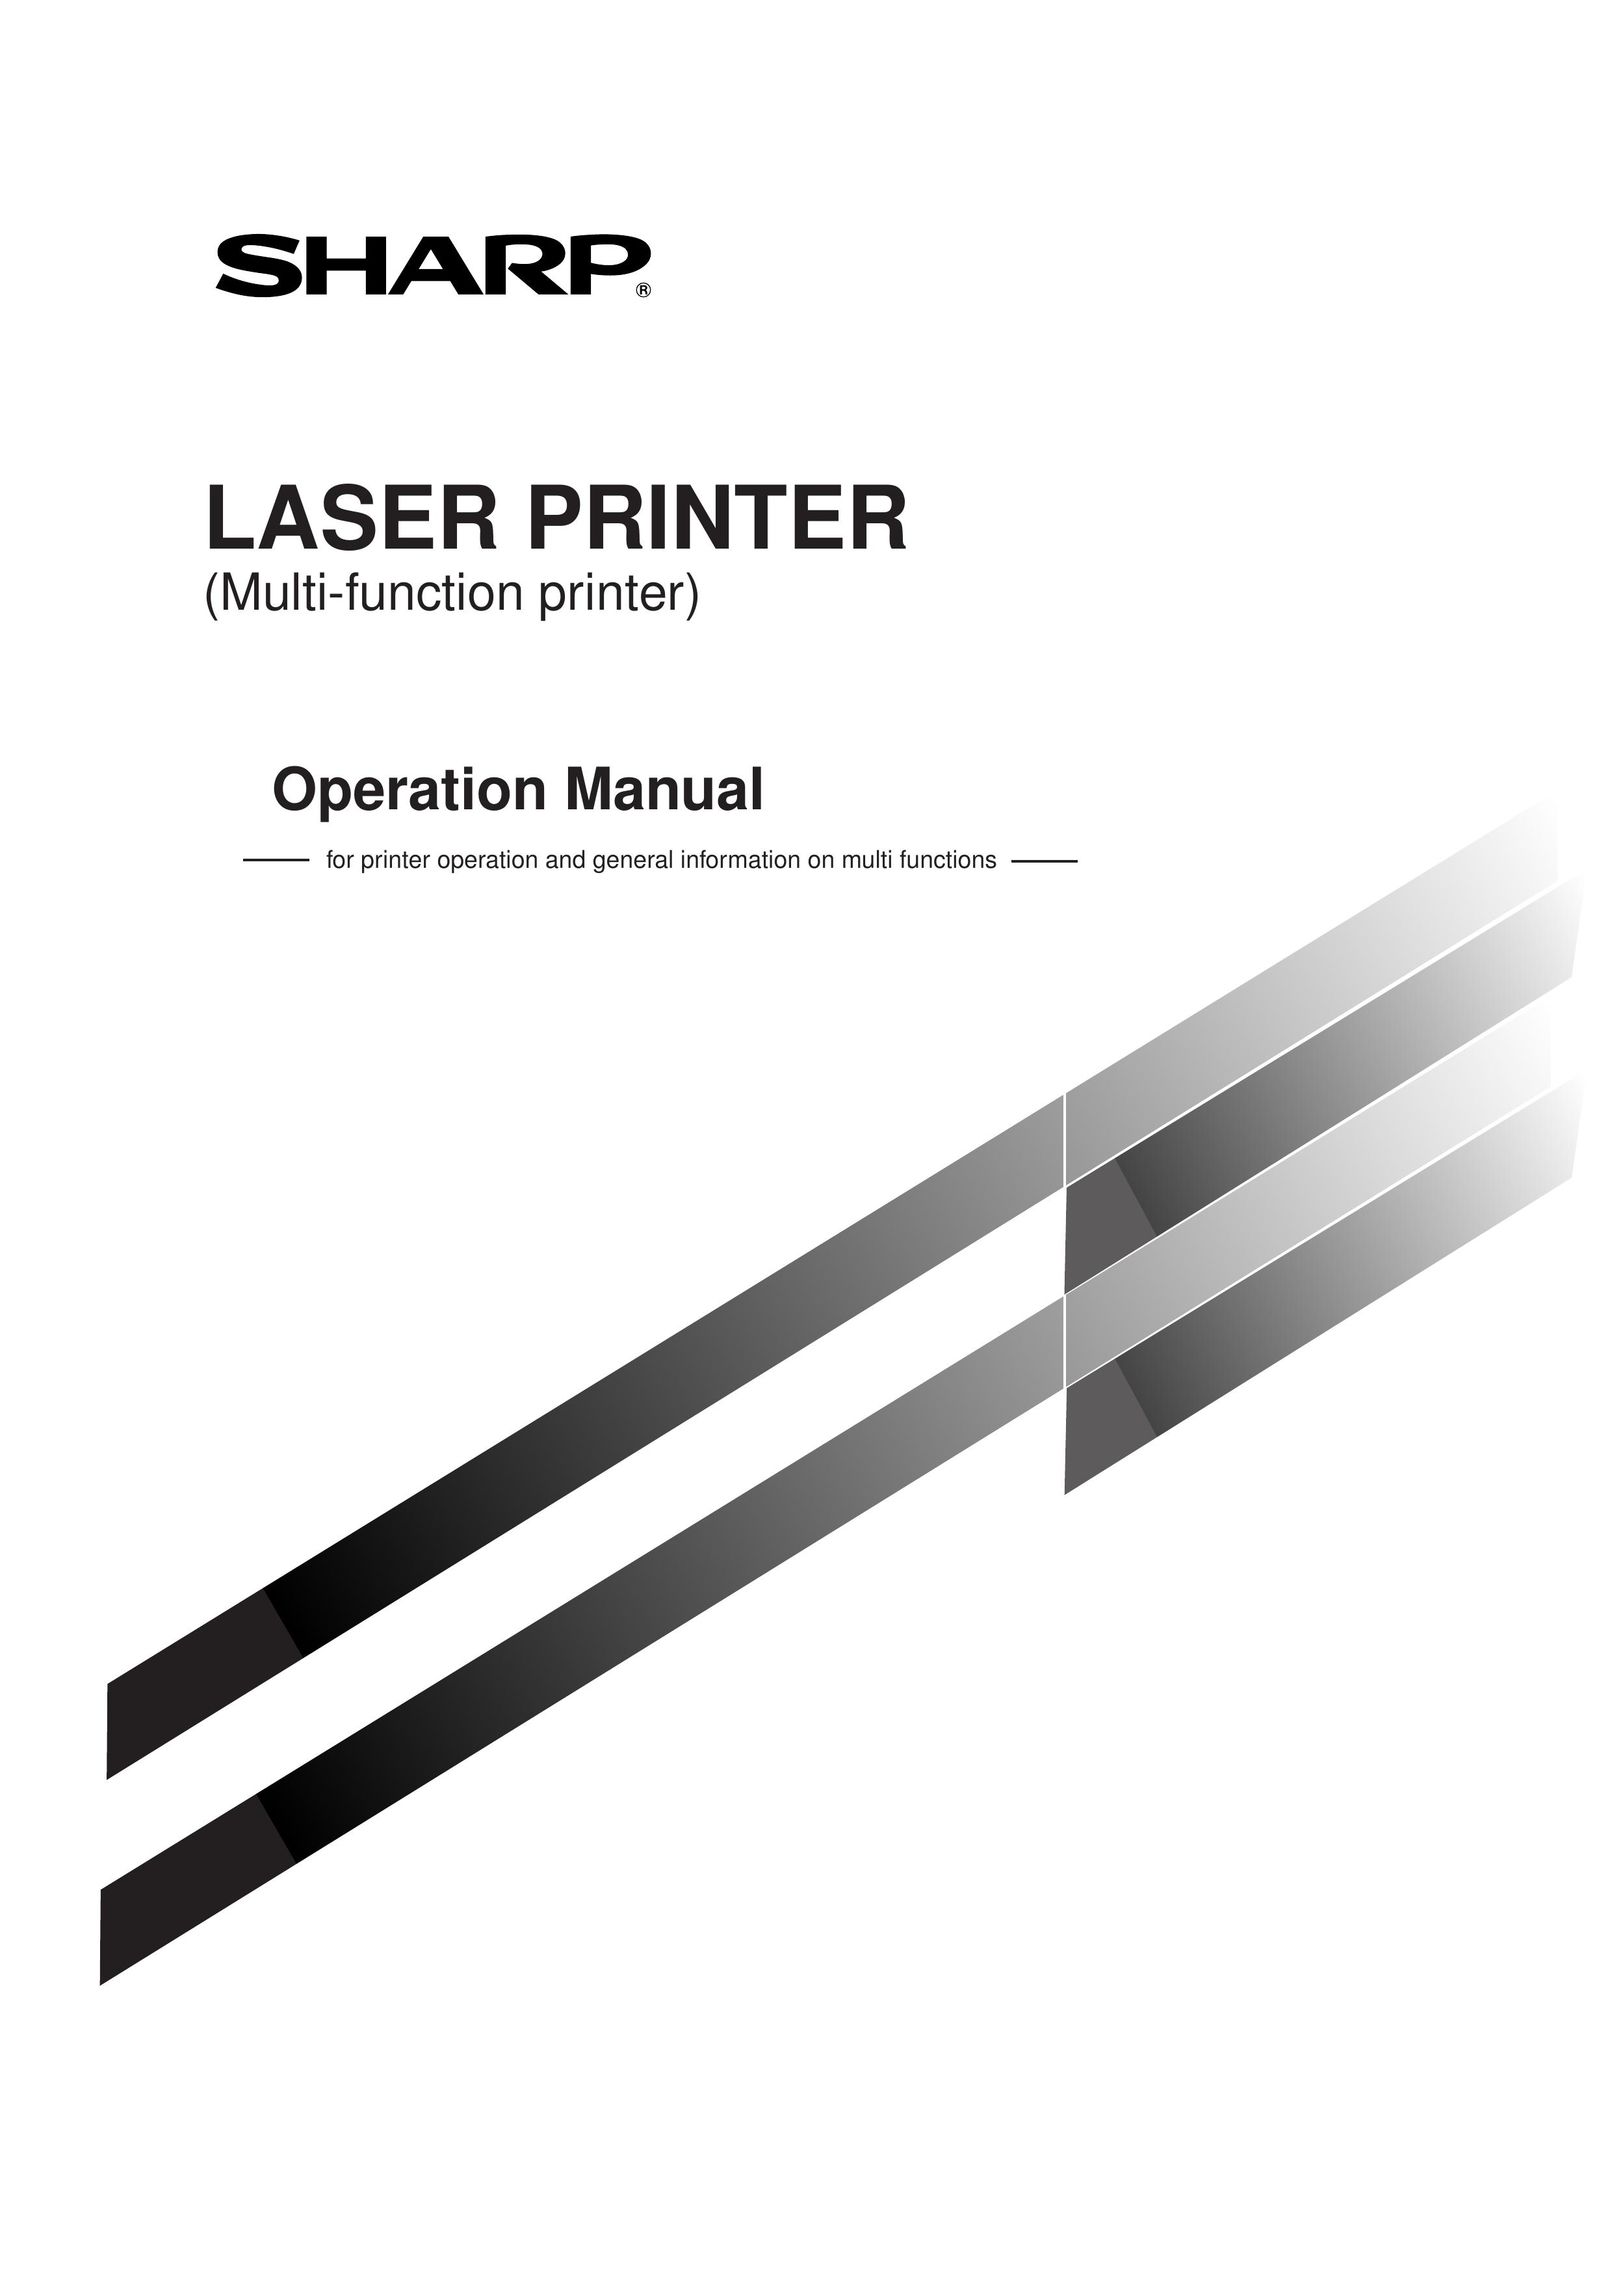 Sharp DM-3500 Printer User Manual